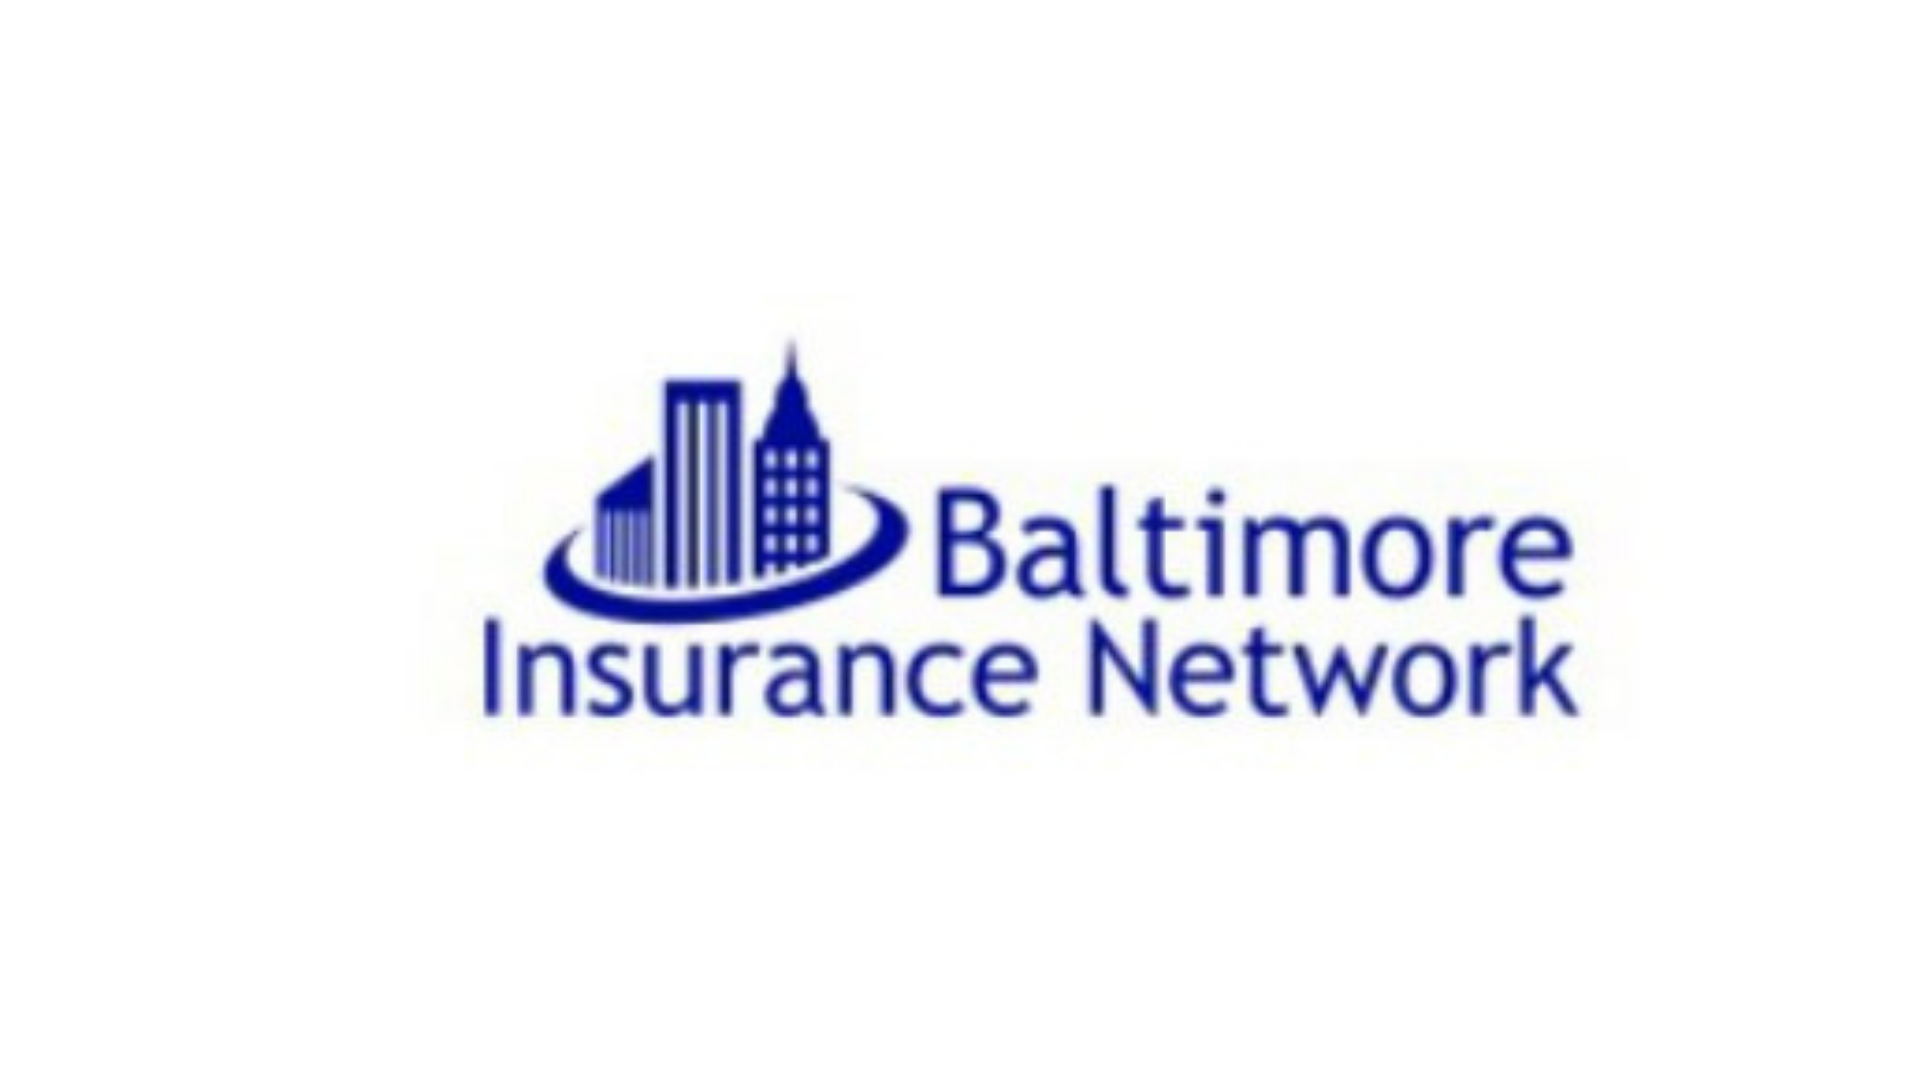 Baltimore Insurance Network